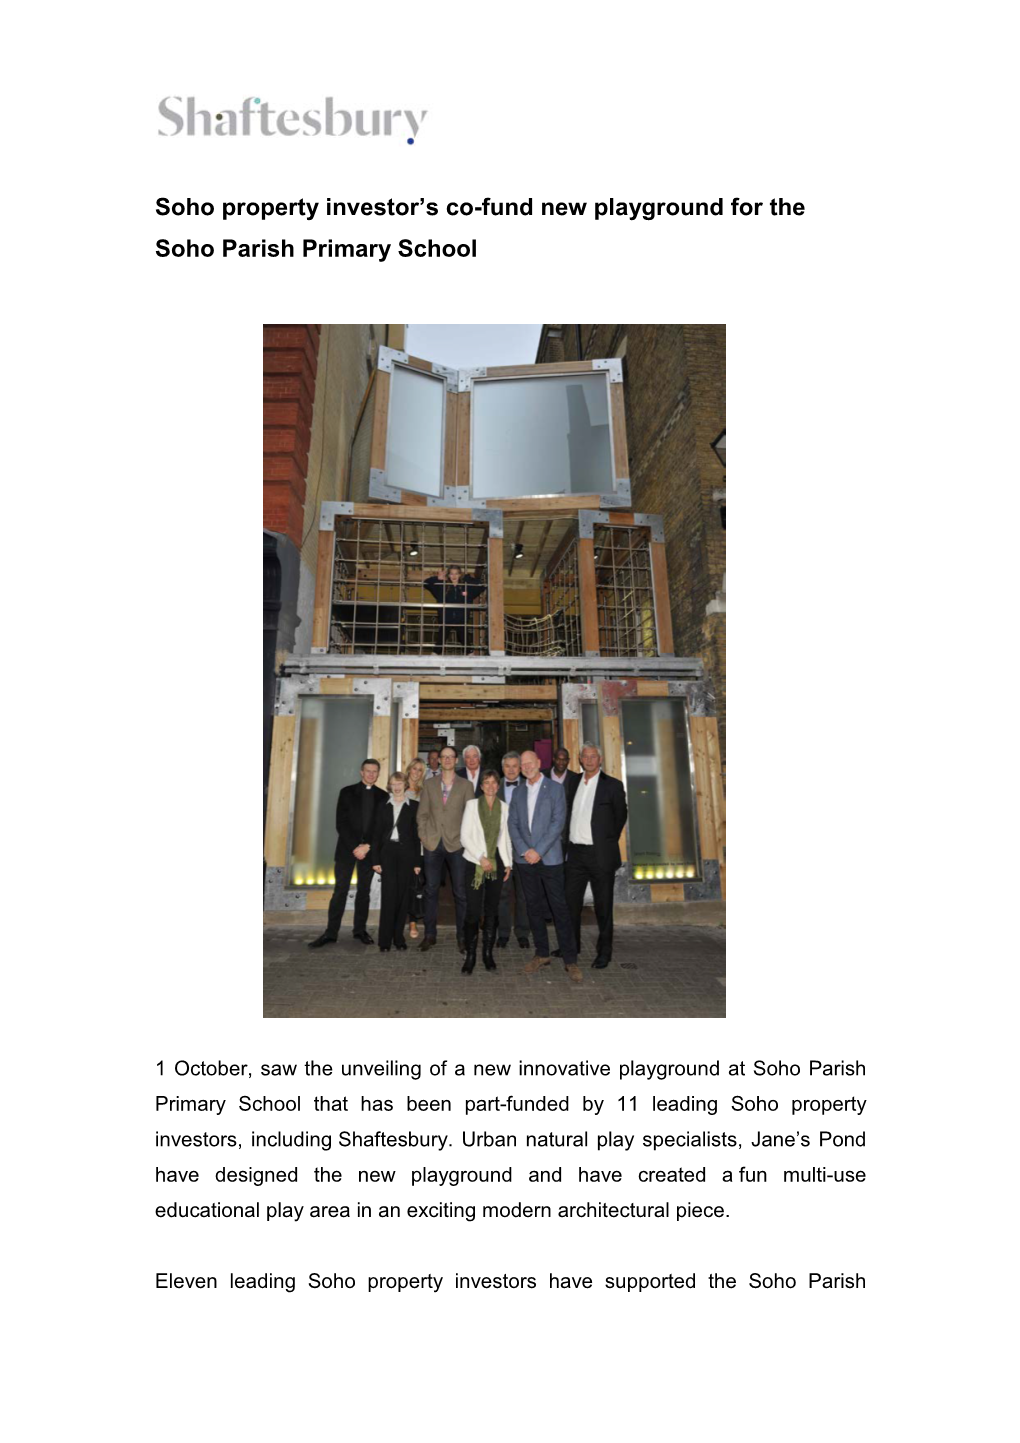 Soho Property Investor's Co-Fund New Playground for the Soho Parish